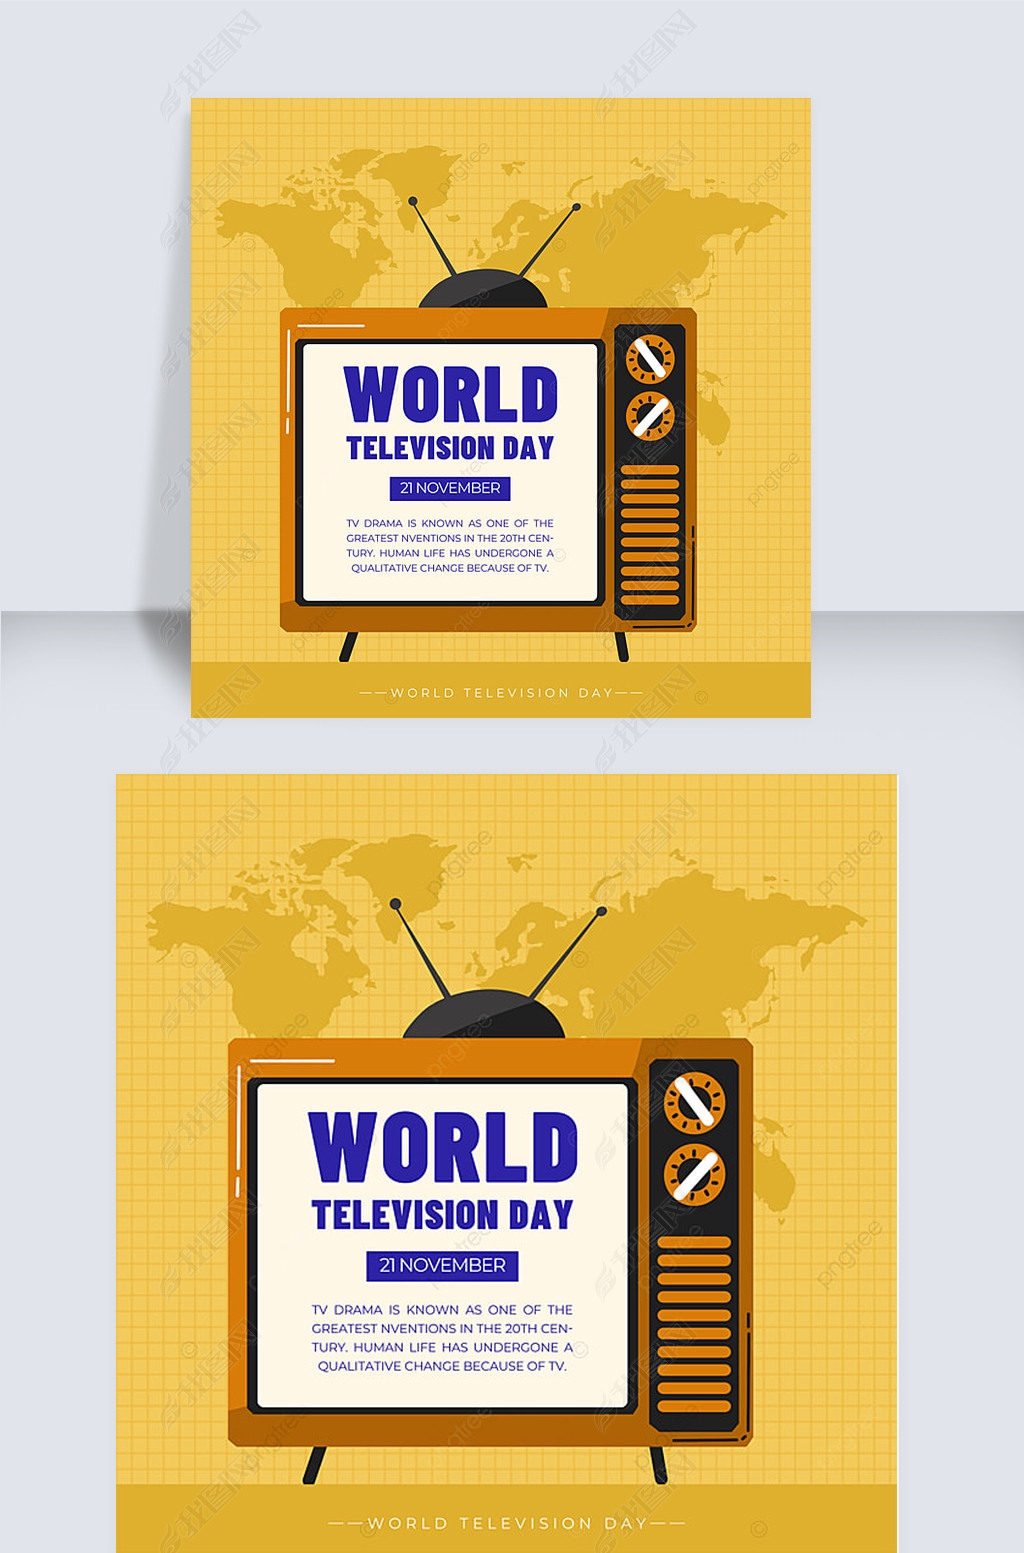 ɫworld television day罻ý